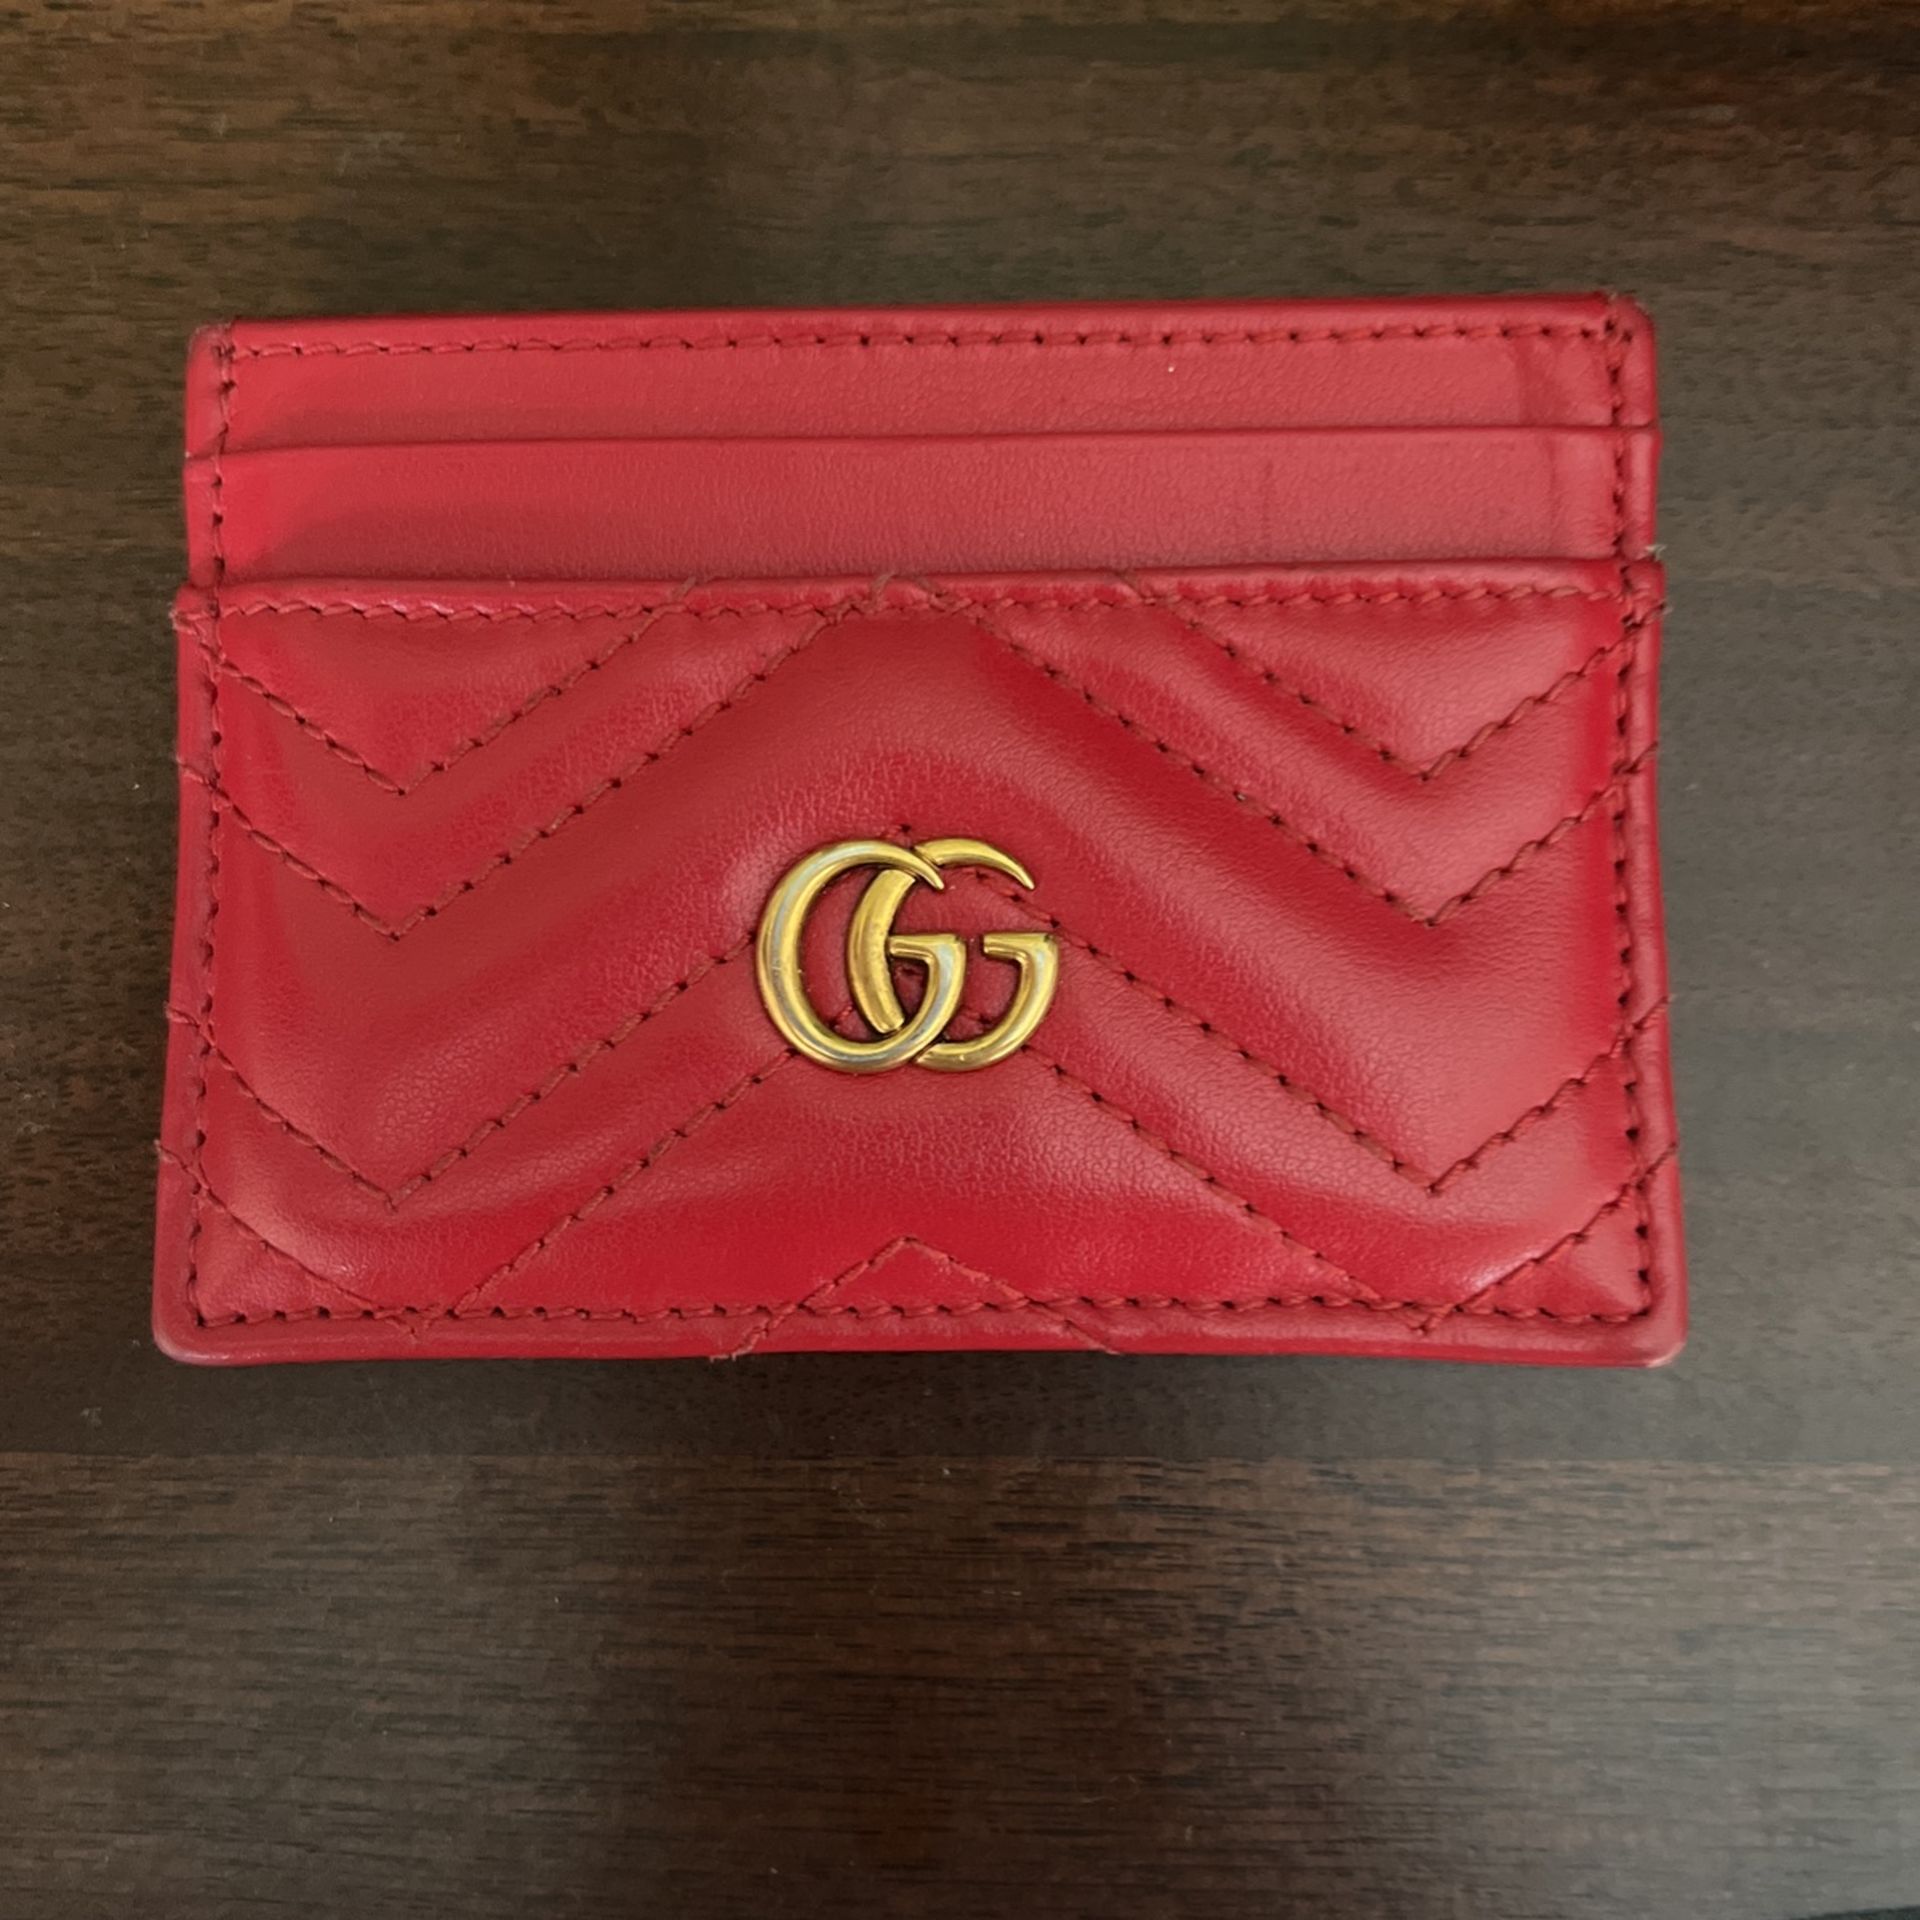 Beautiful Gucci Credit Card Wallet